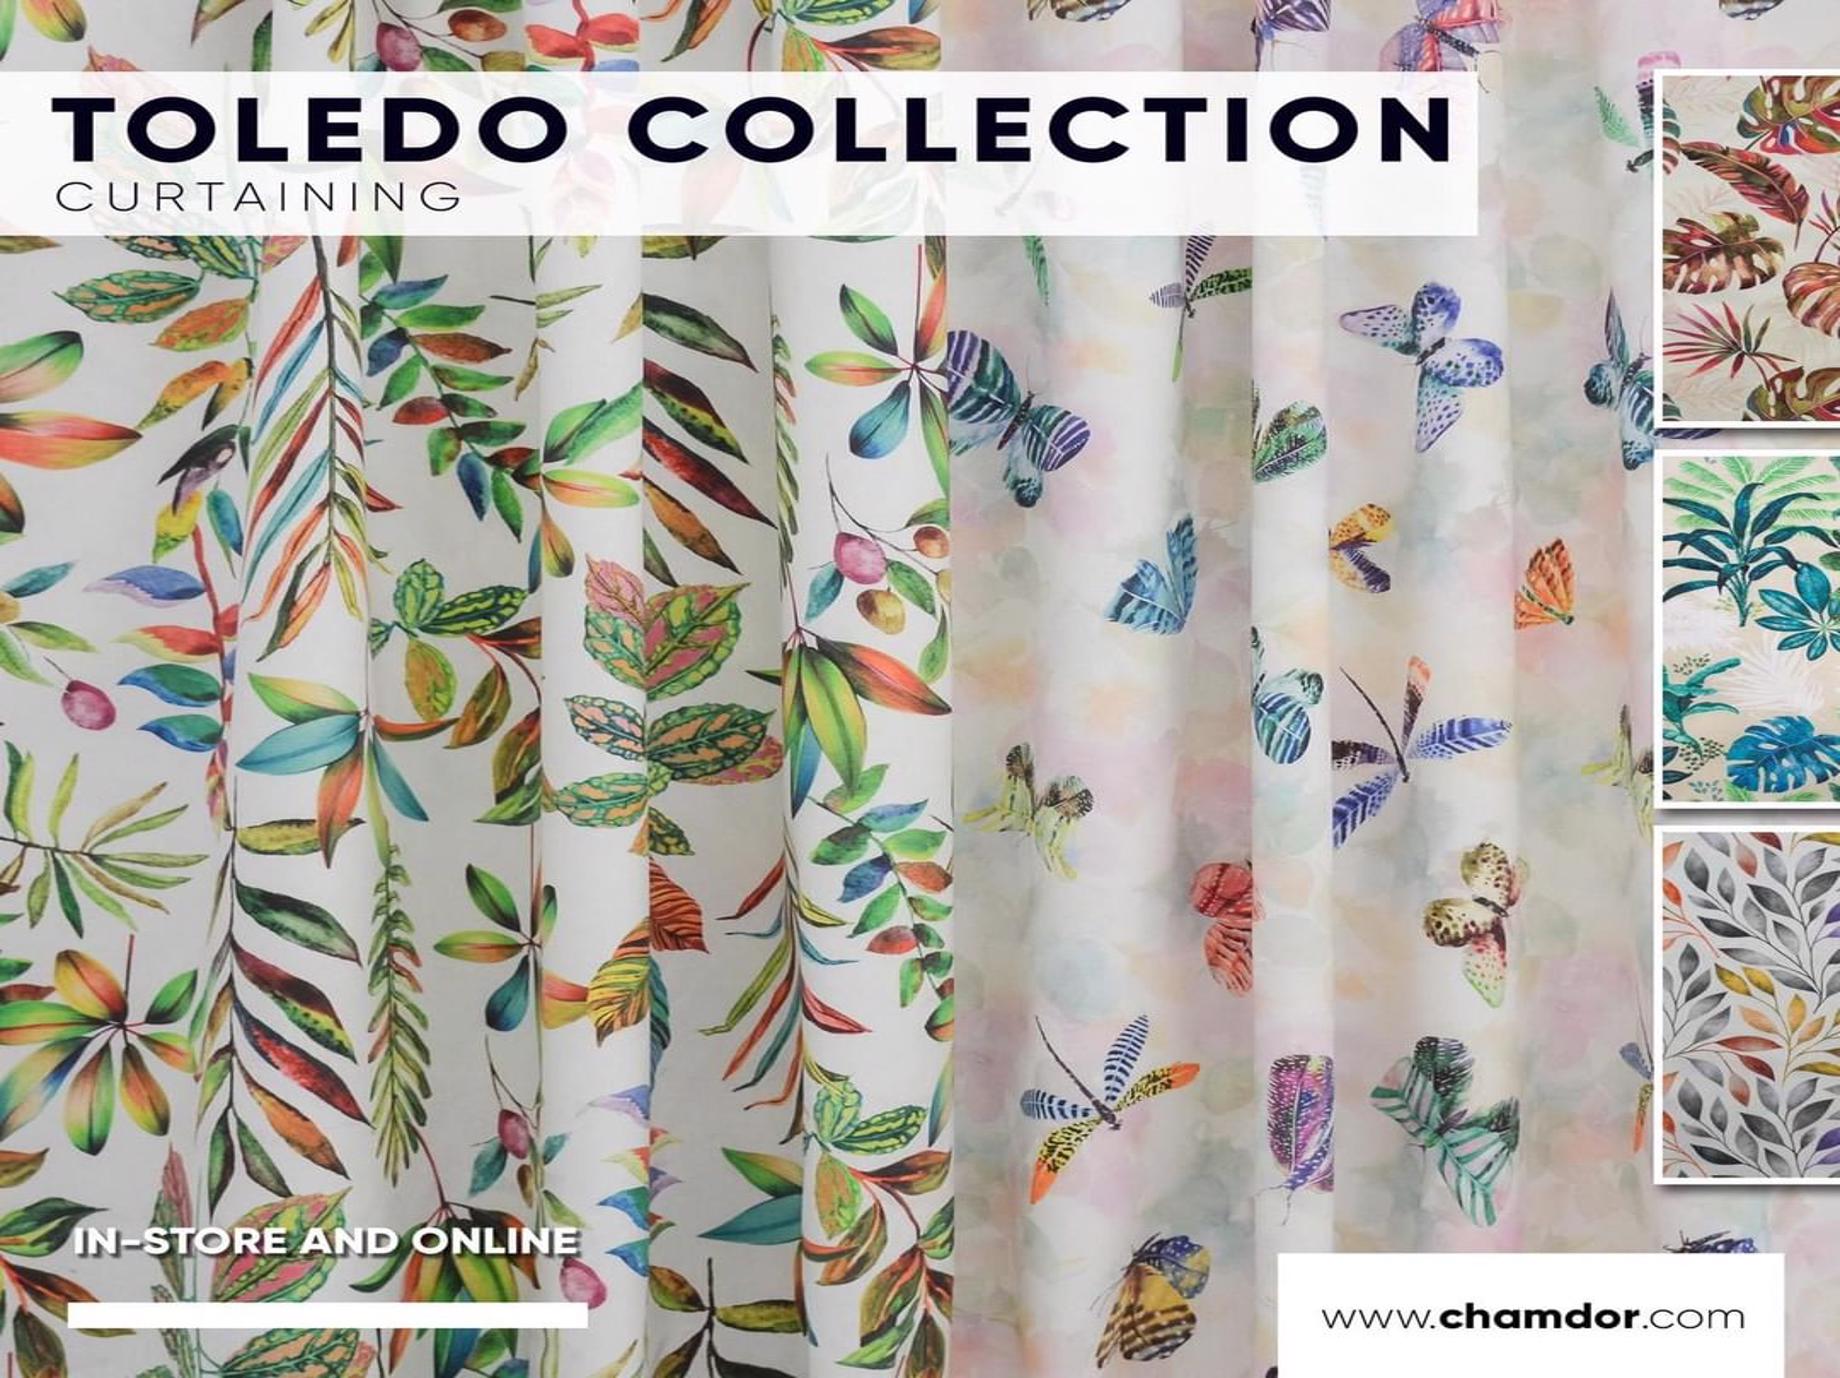 Toledo Collection